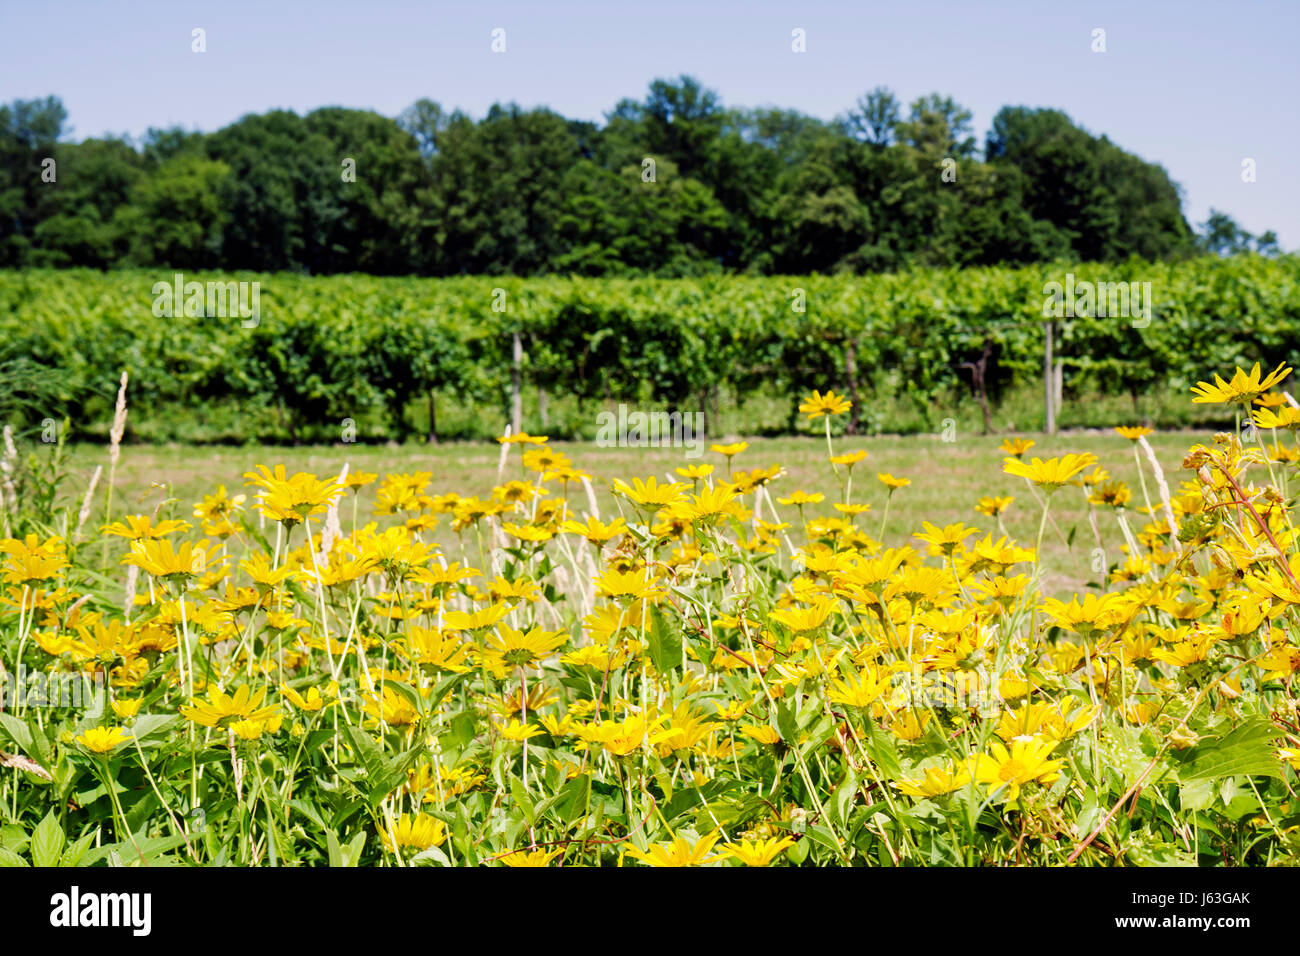 Michigan Berrien Springs,Domaine Berrien Cellars,vineyard winery,grapes,farm,estate bottled wine,viticulture,plants,yellow wild flower,flower,vines,MI Stock Photo